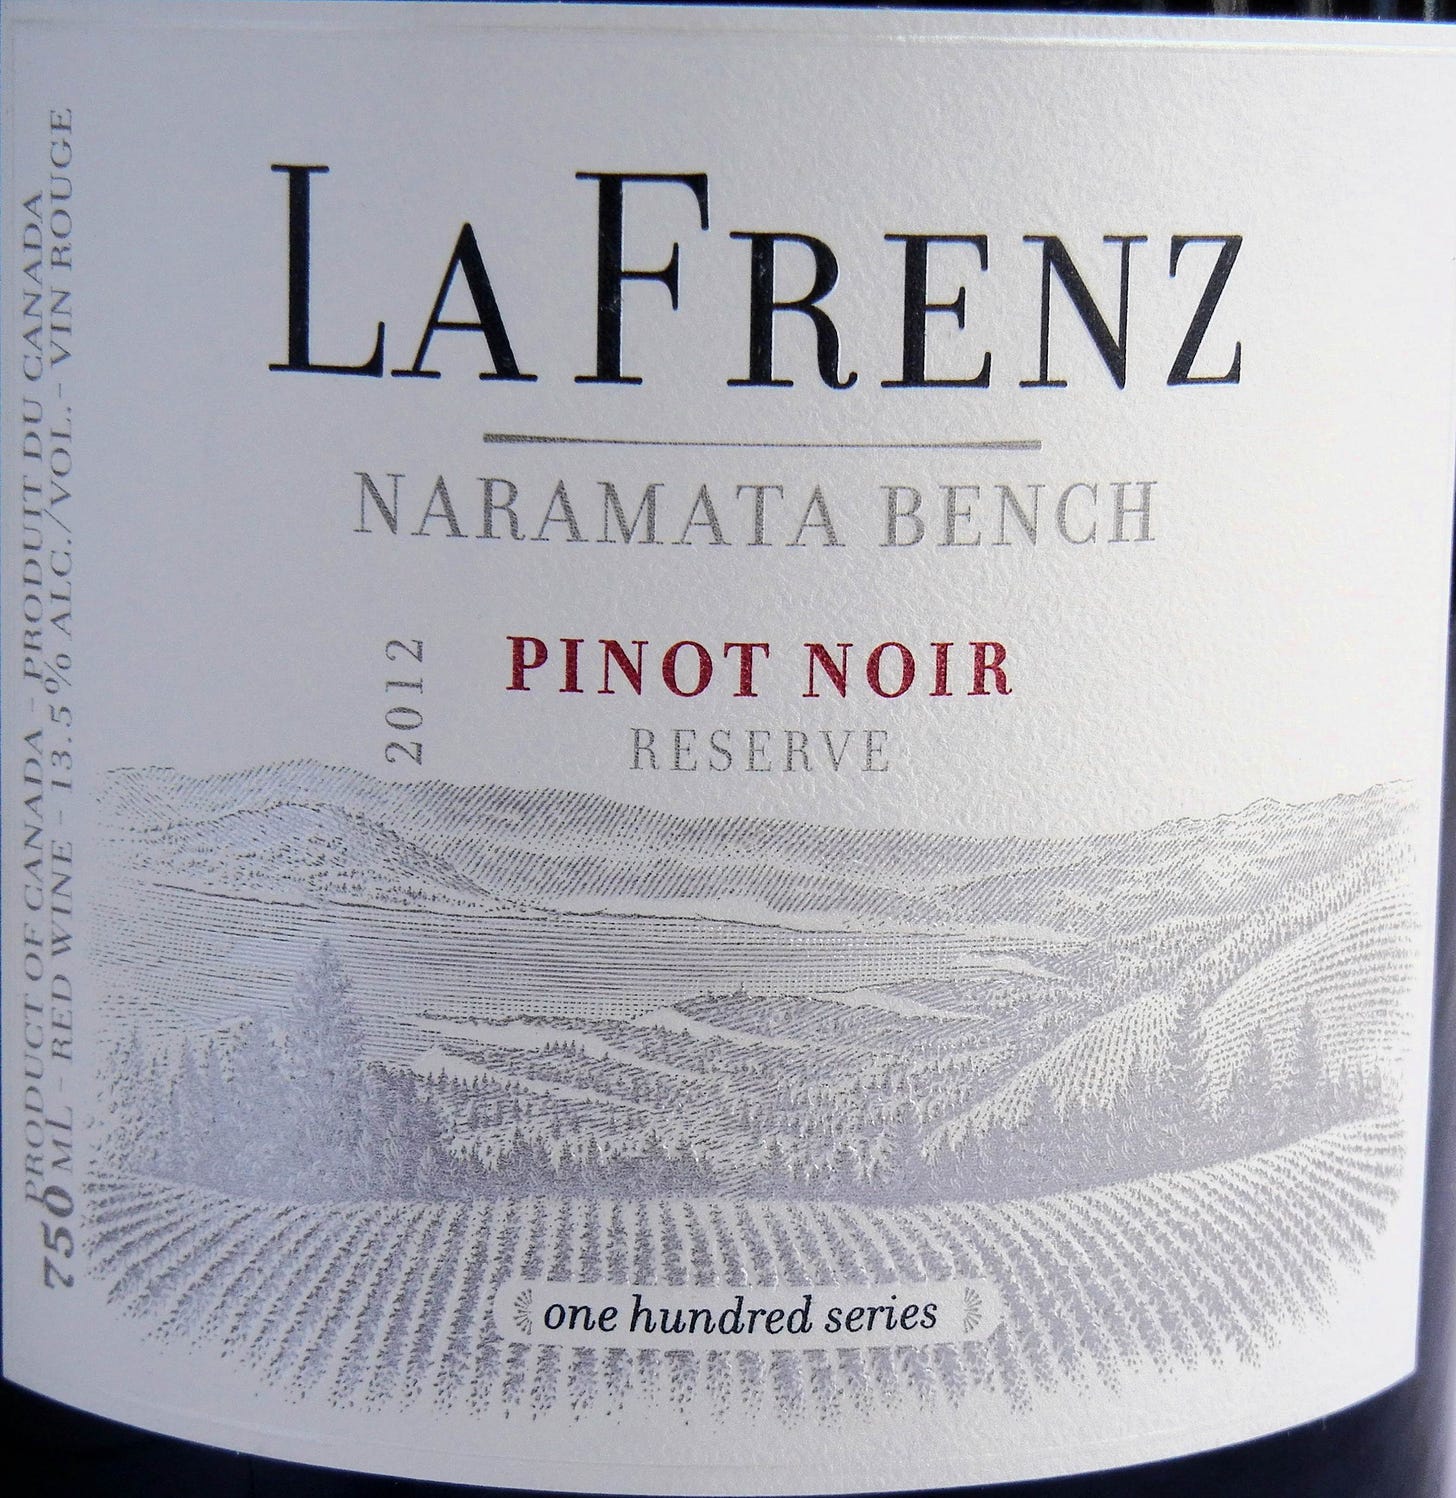 La Frenz Reserve Pinot Noir 2012 Label - BC Pinot Noir Tasting Review 19 